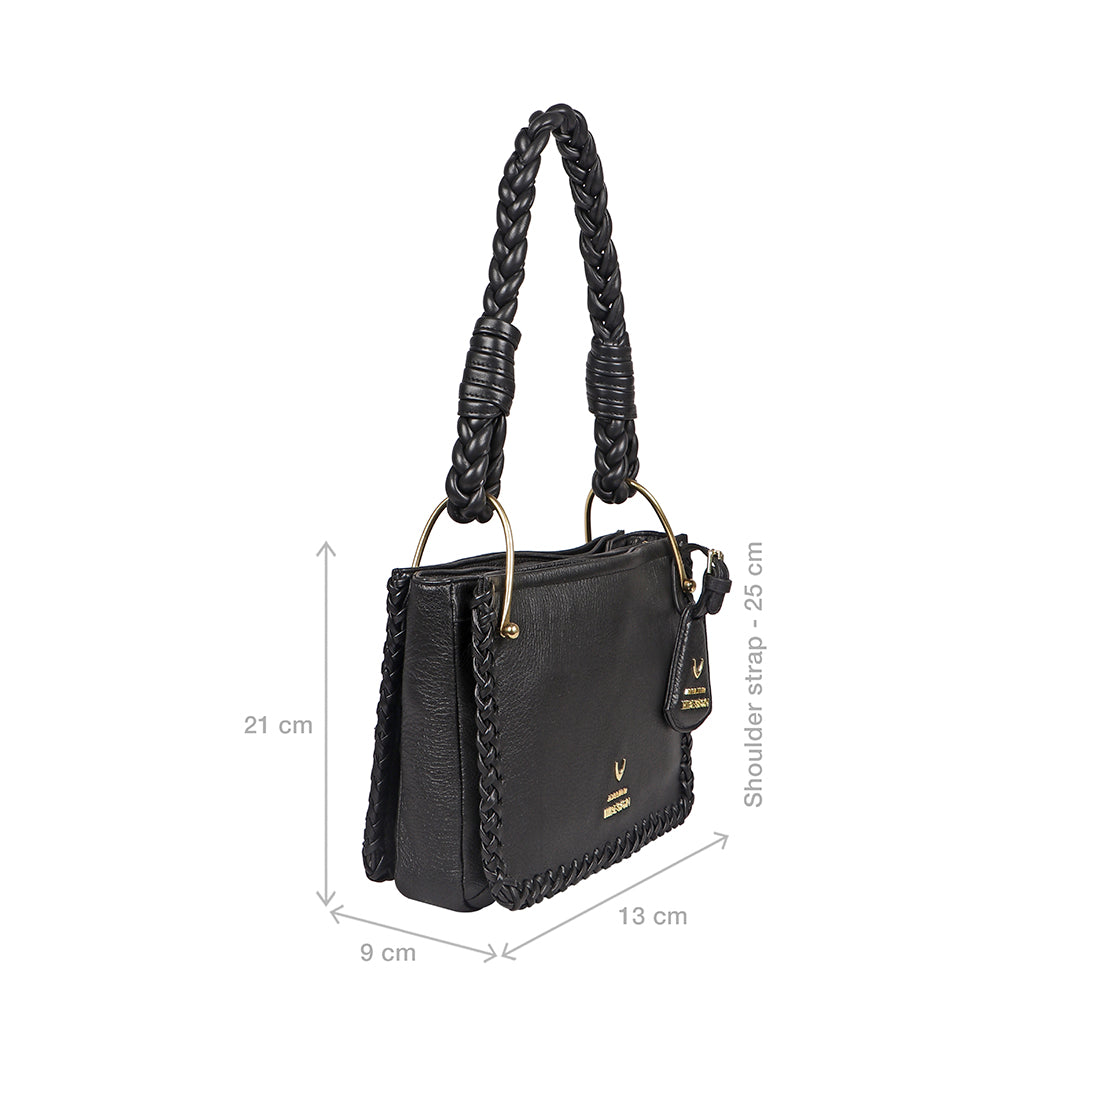 Buy Blue Ee Libra 03 Sling Bag Online - Hidesign